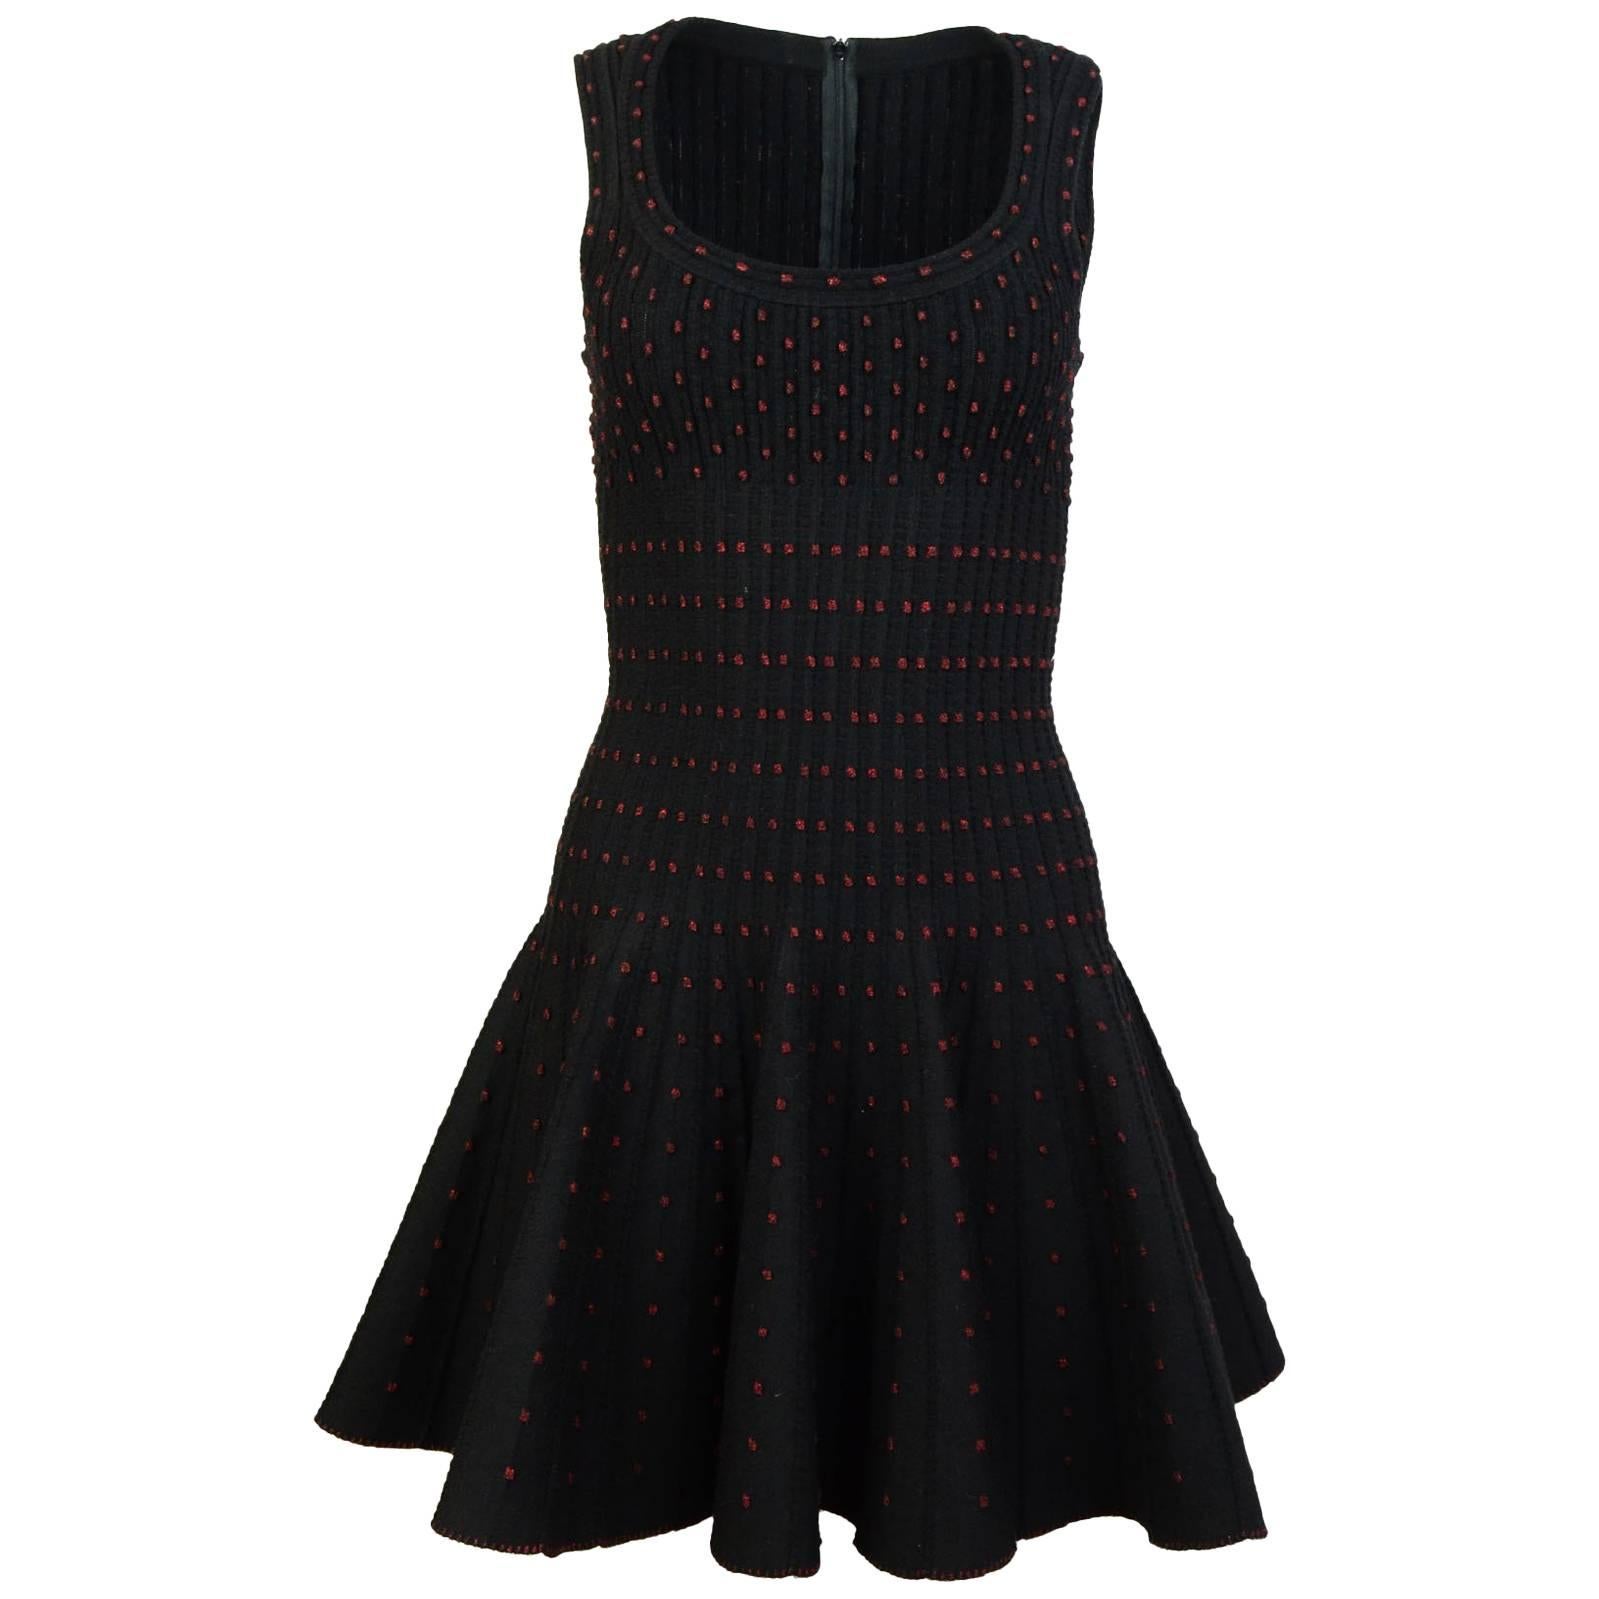 Alaia Black & Red Polka Dot Fit & Flare Dress Sz FR36